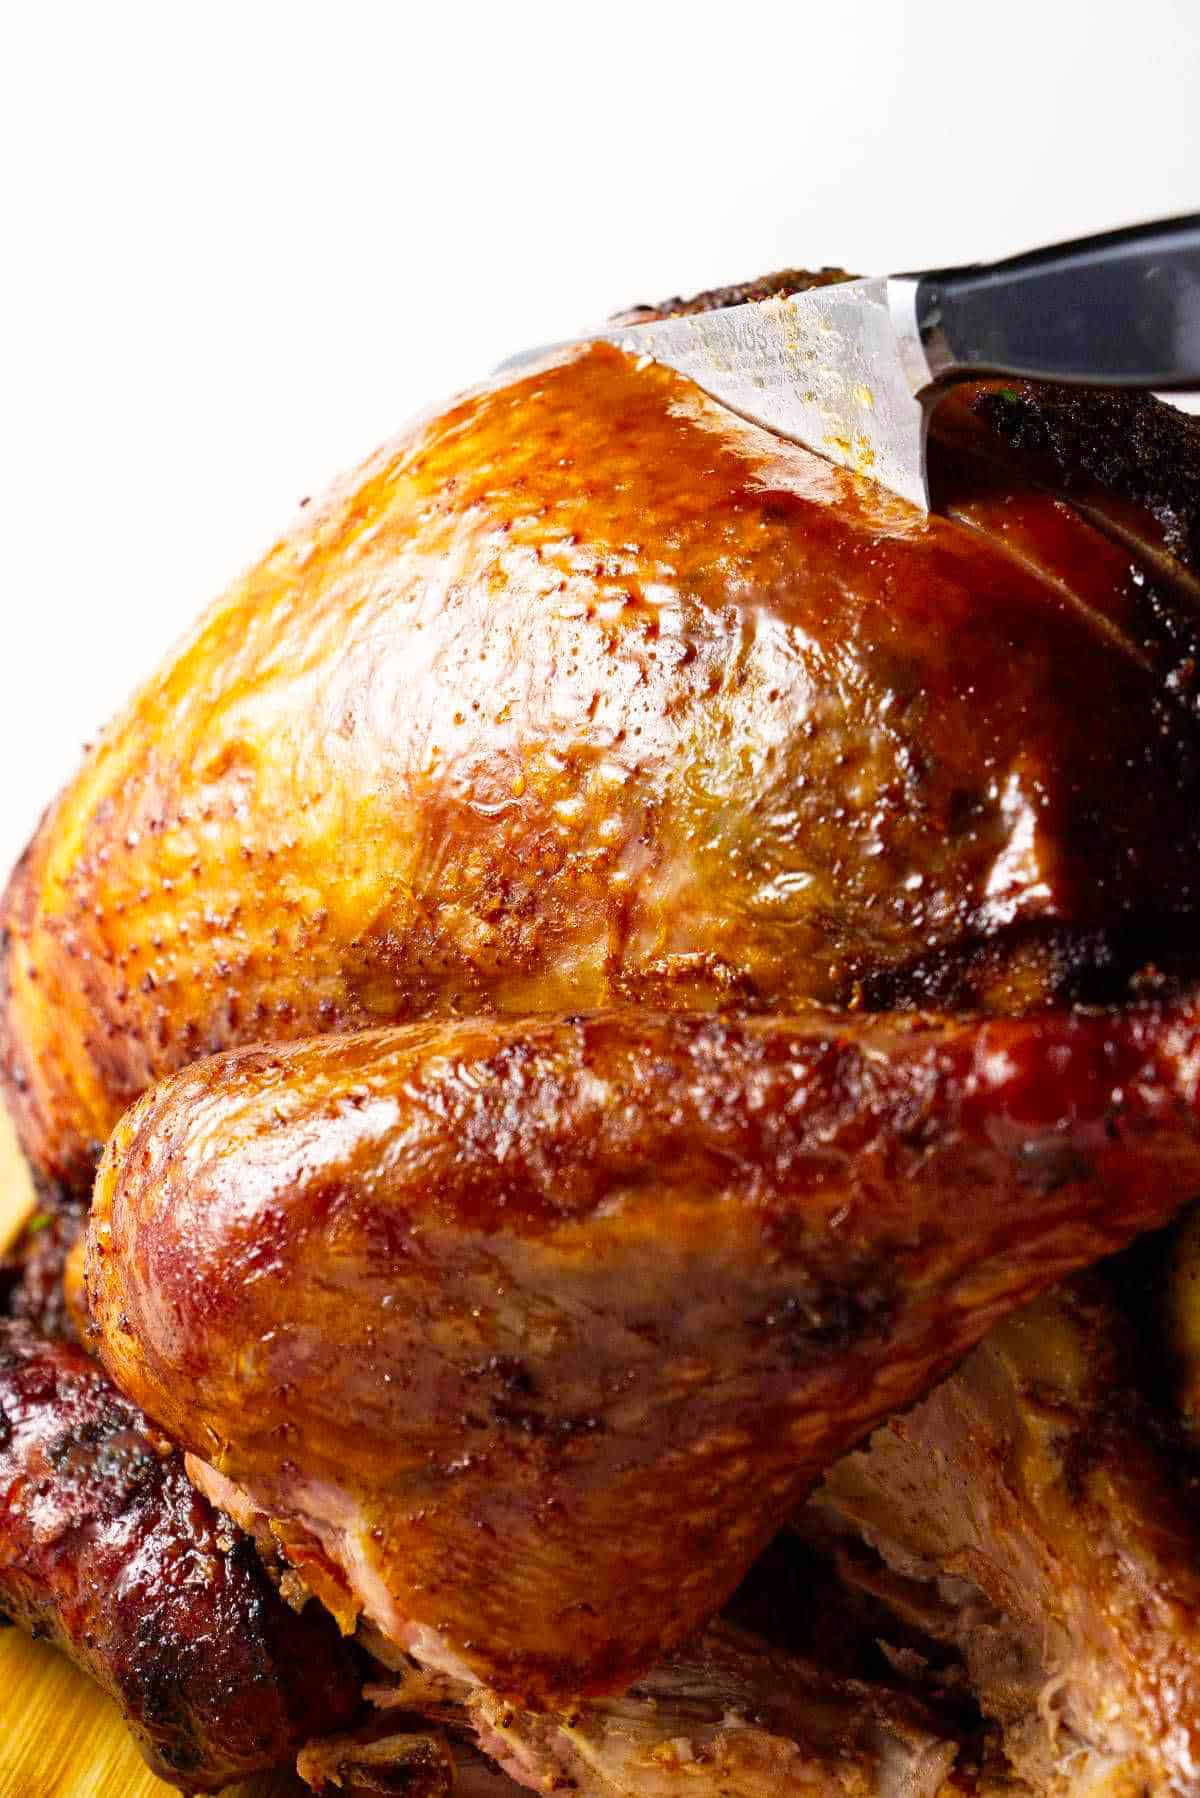 Knife carving a freshly roasted whole turkey.